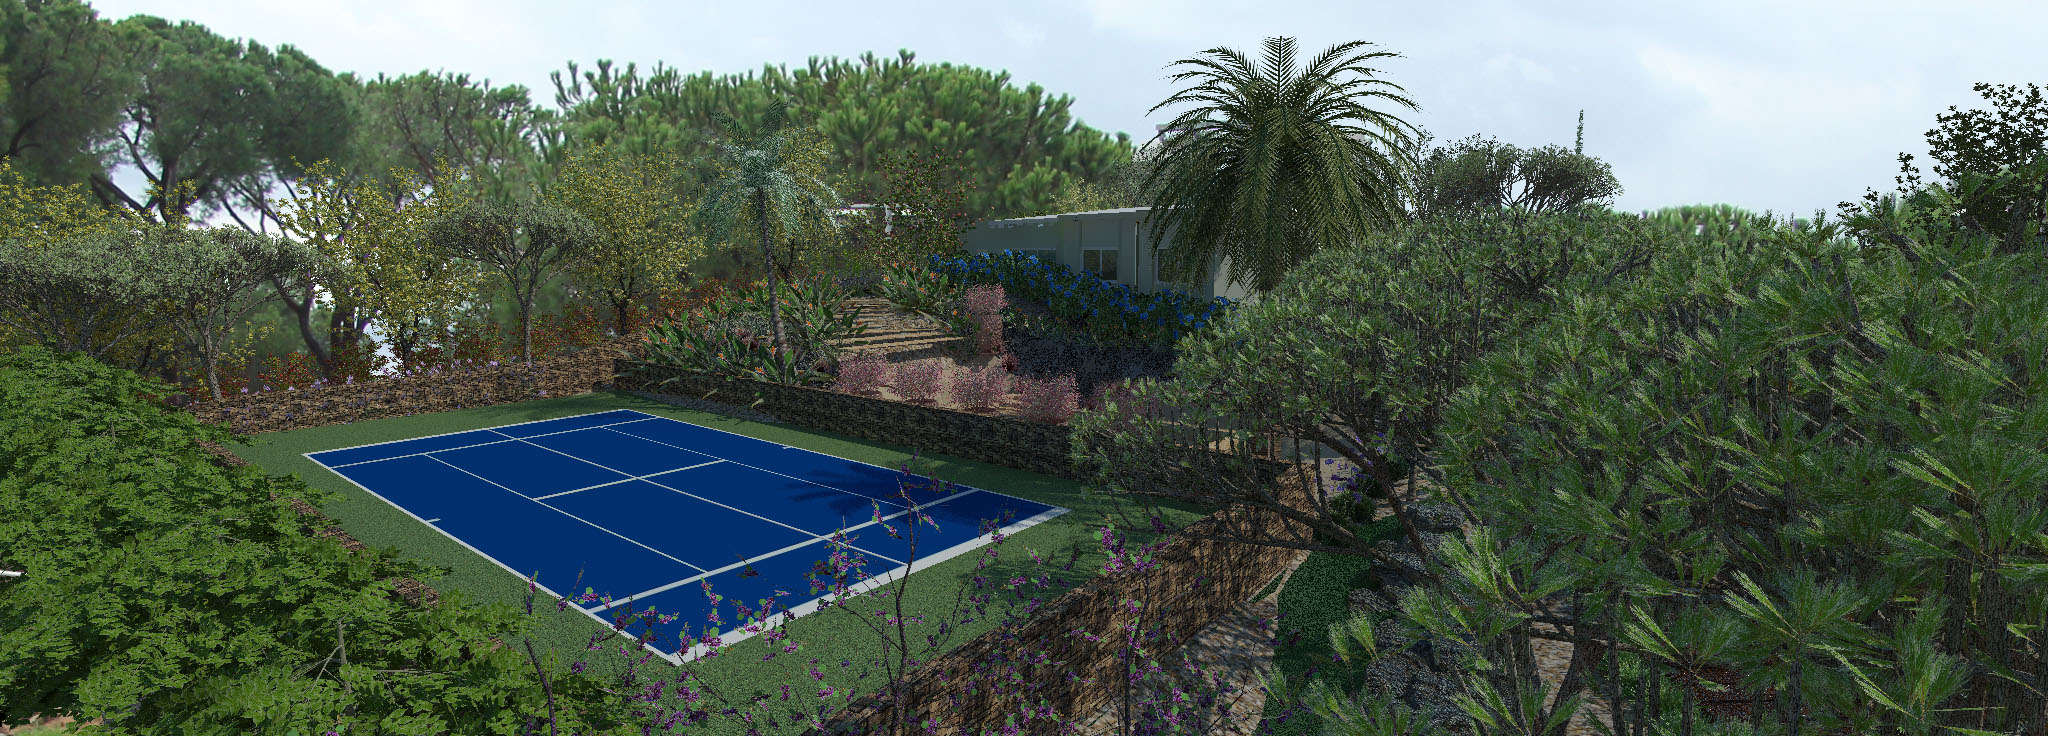 view tennis court